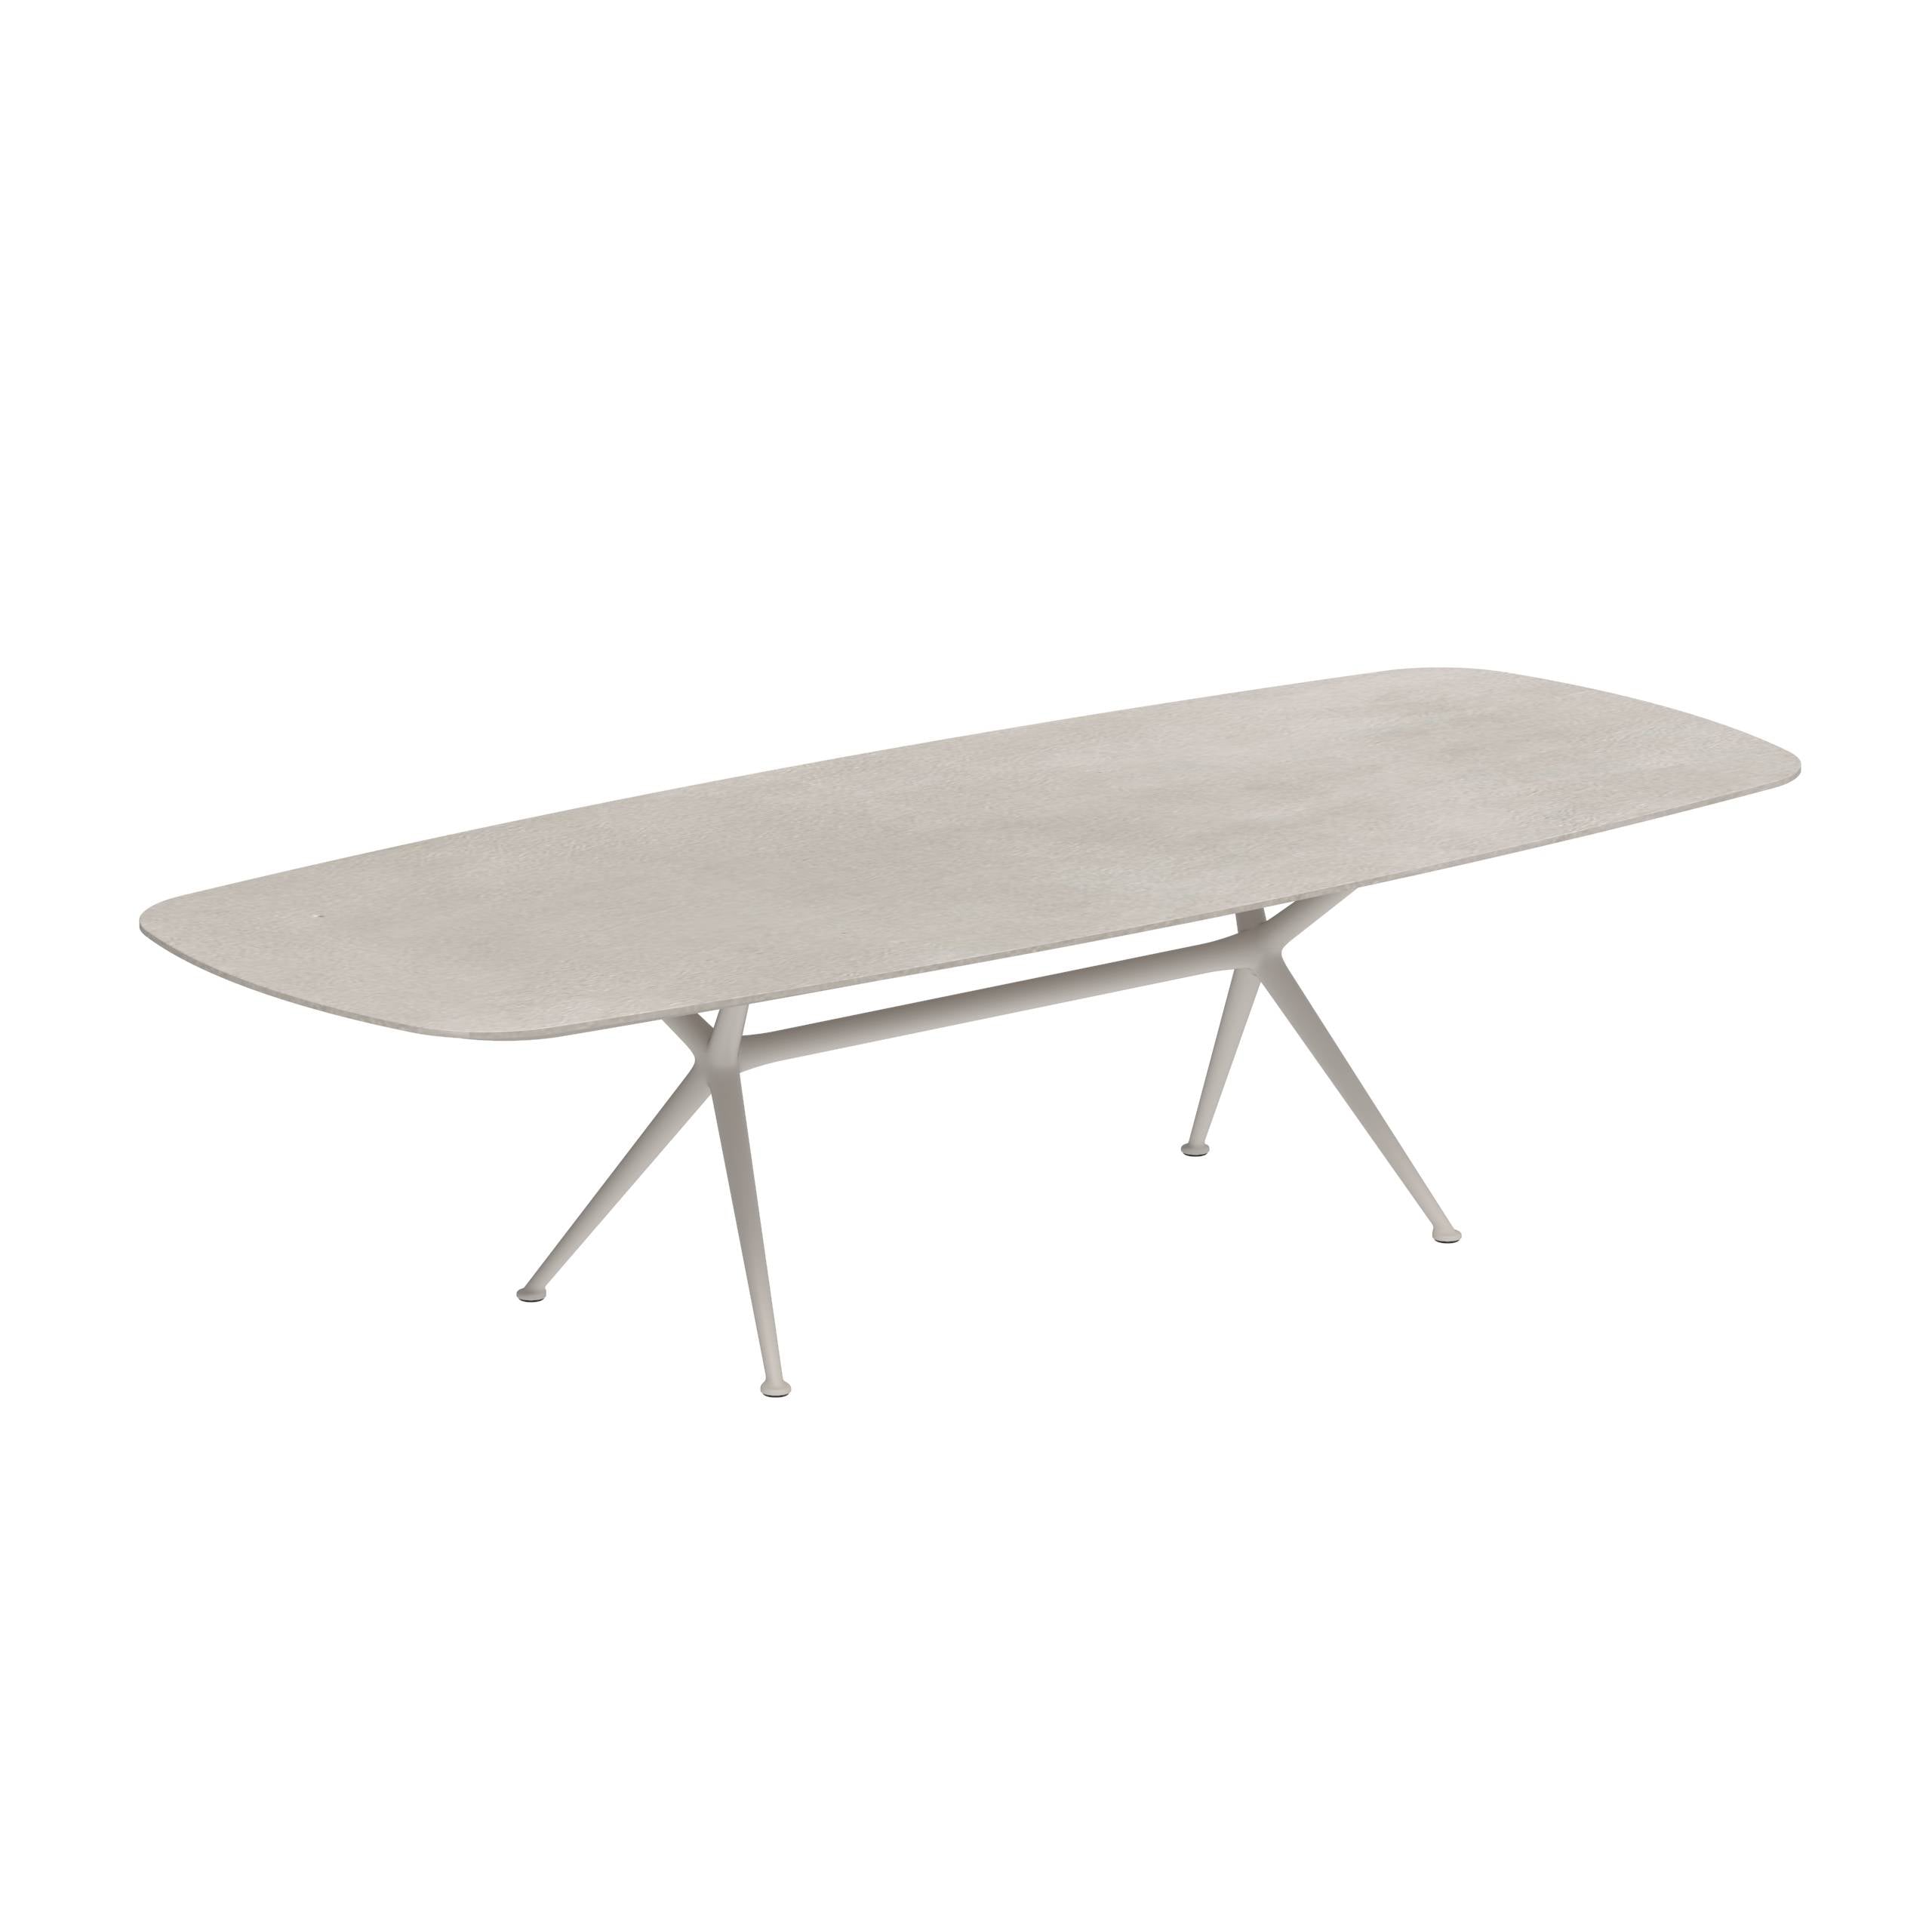 Exes Table 300x120cm Alu Legs Sand - Table Top Ceramic Cemento Luminoso